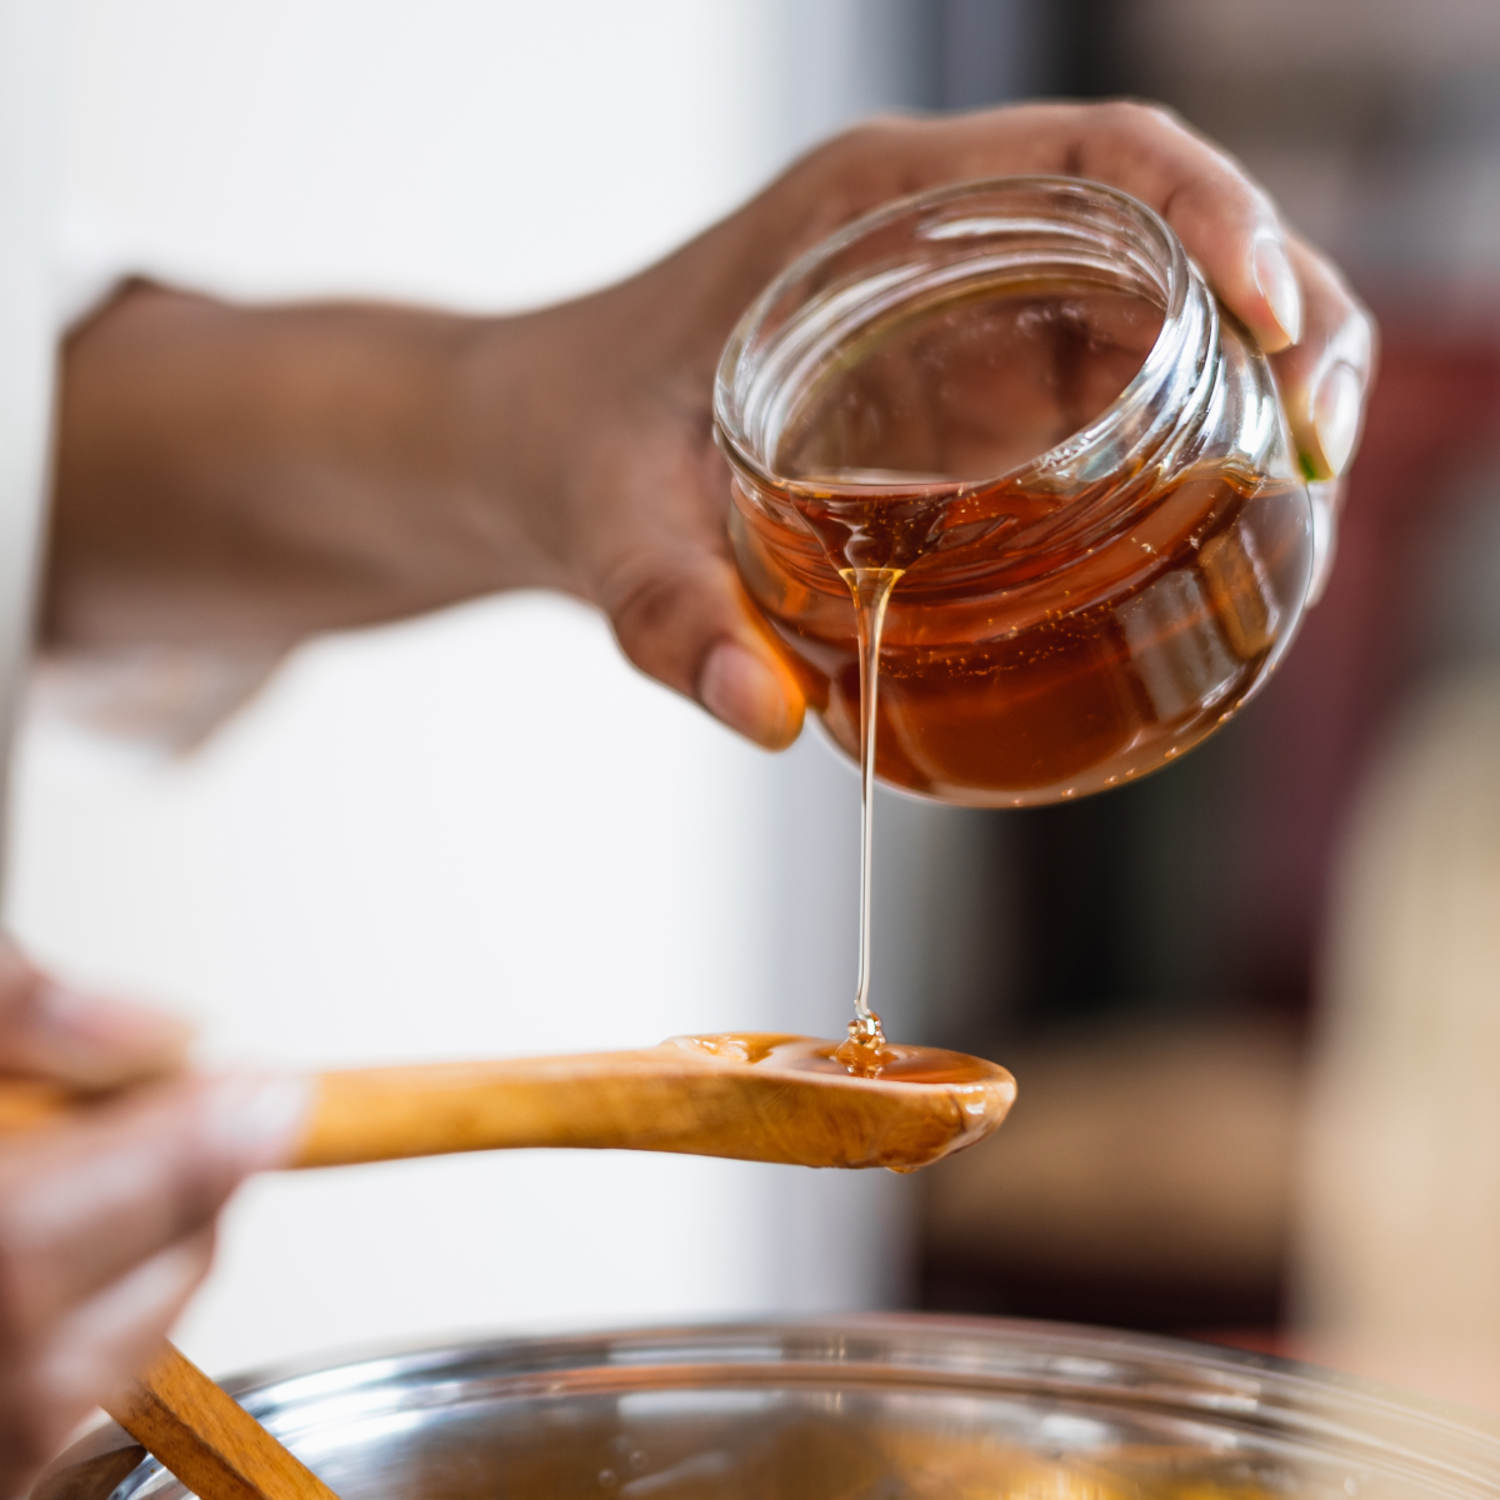 Can honey treat seasonal allergies?